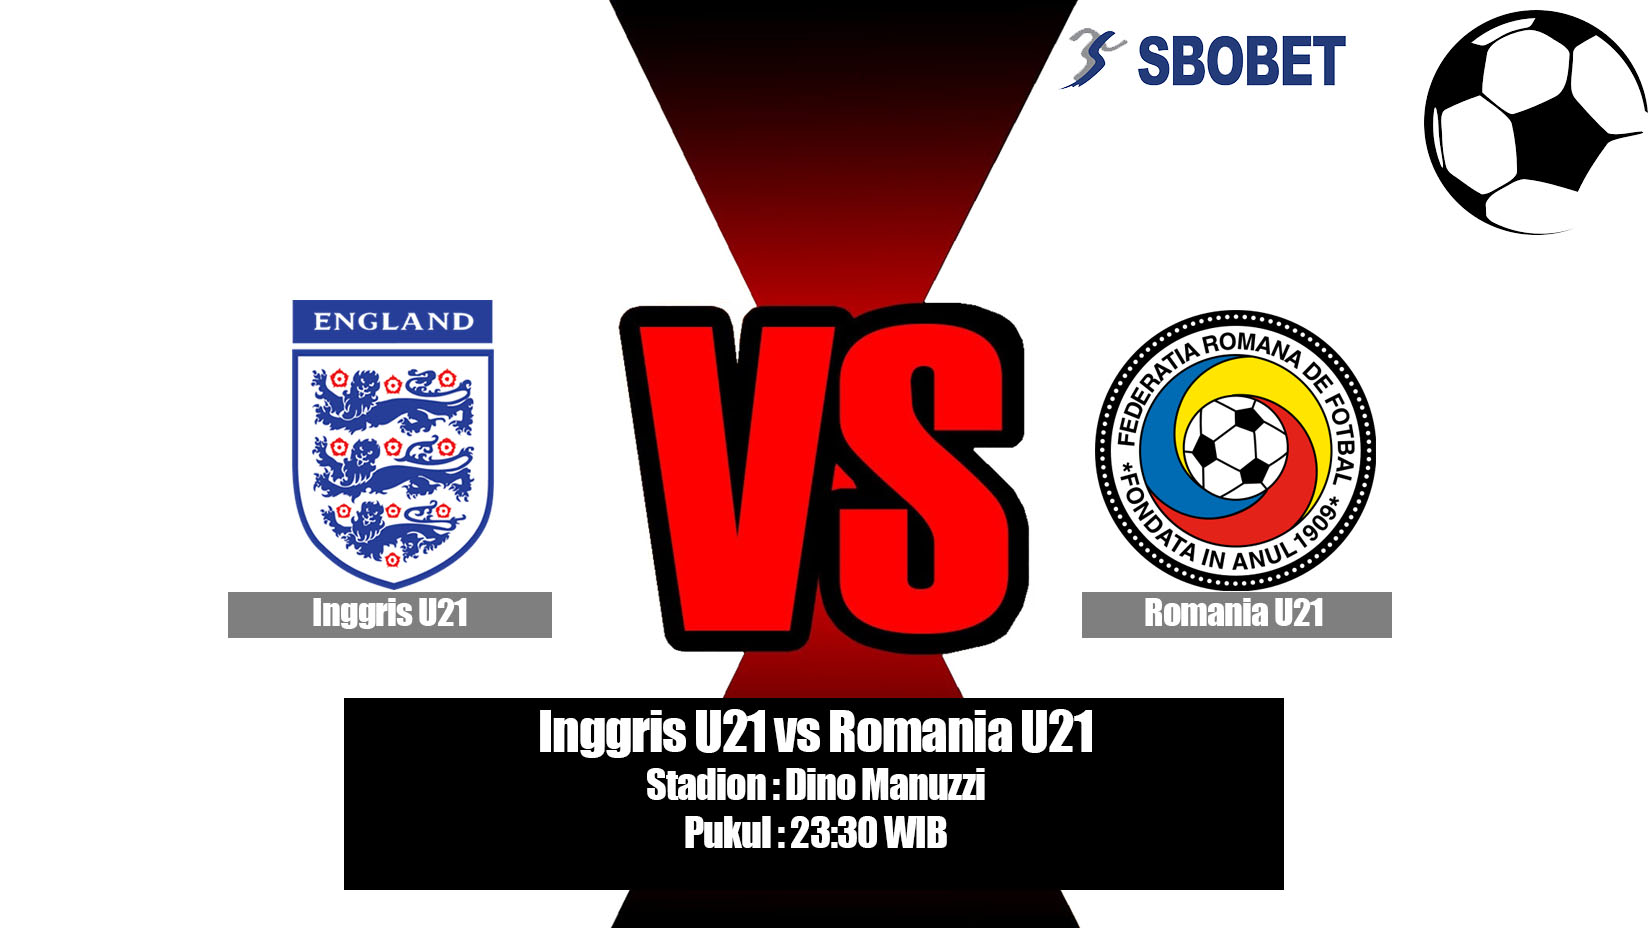 Prediksi Bola Inggris U21 vs Romania U21 21 Juni 2019